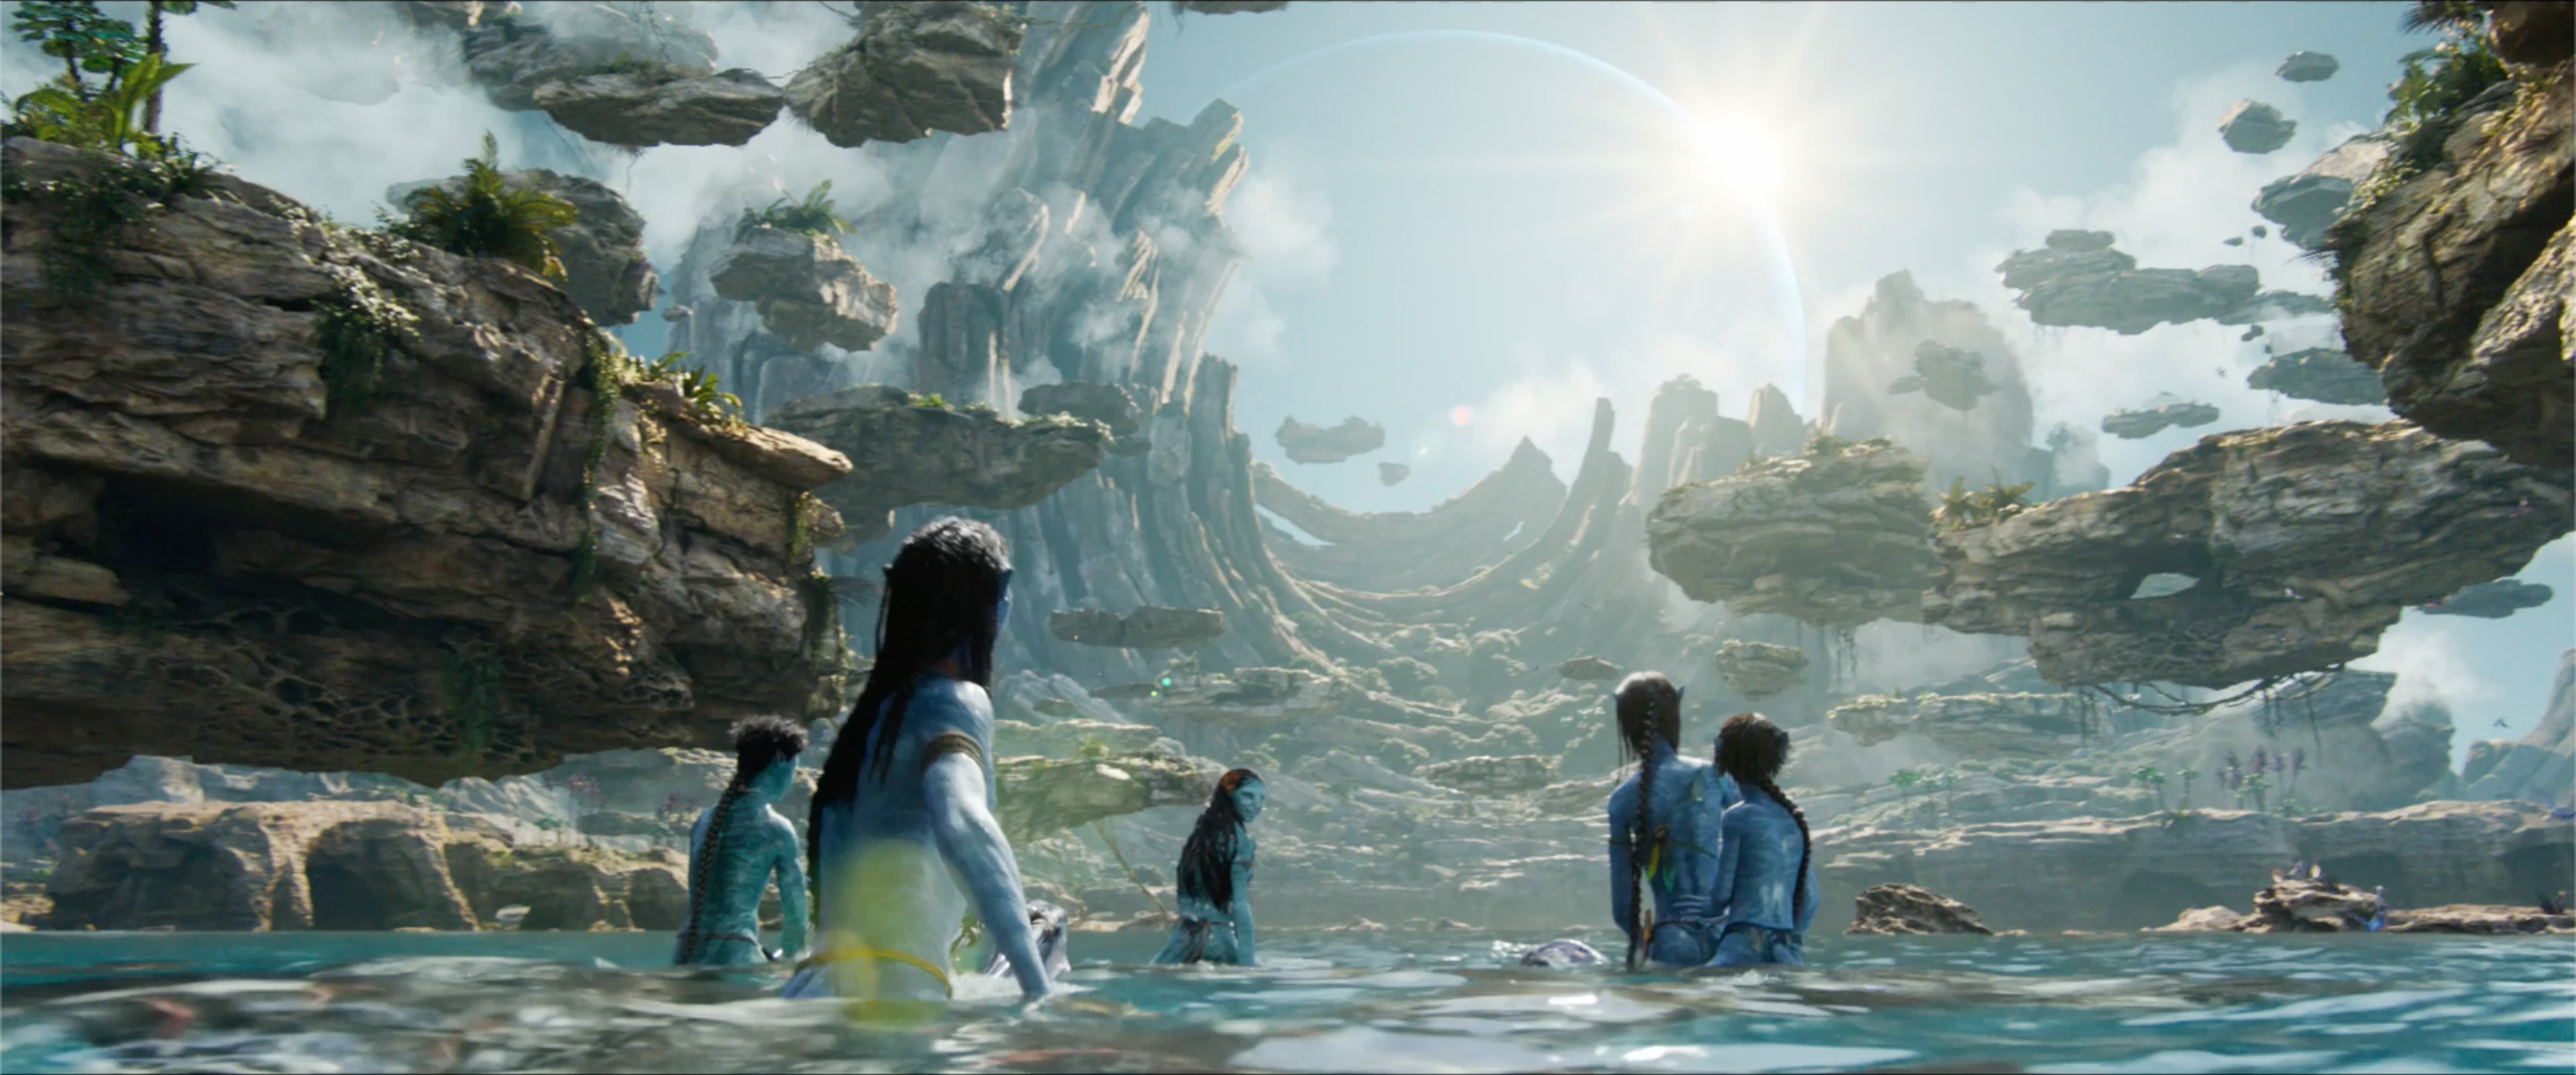 Disney Bundle Avatar: The Way of Water Upgrade